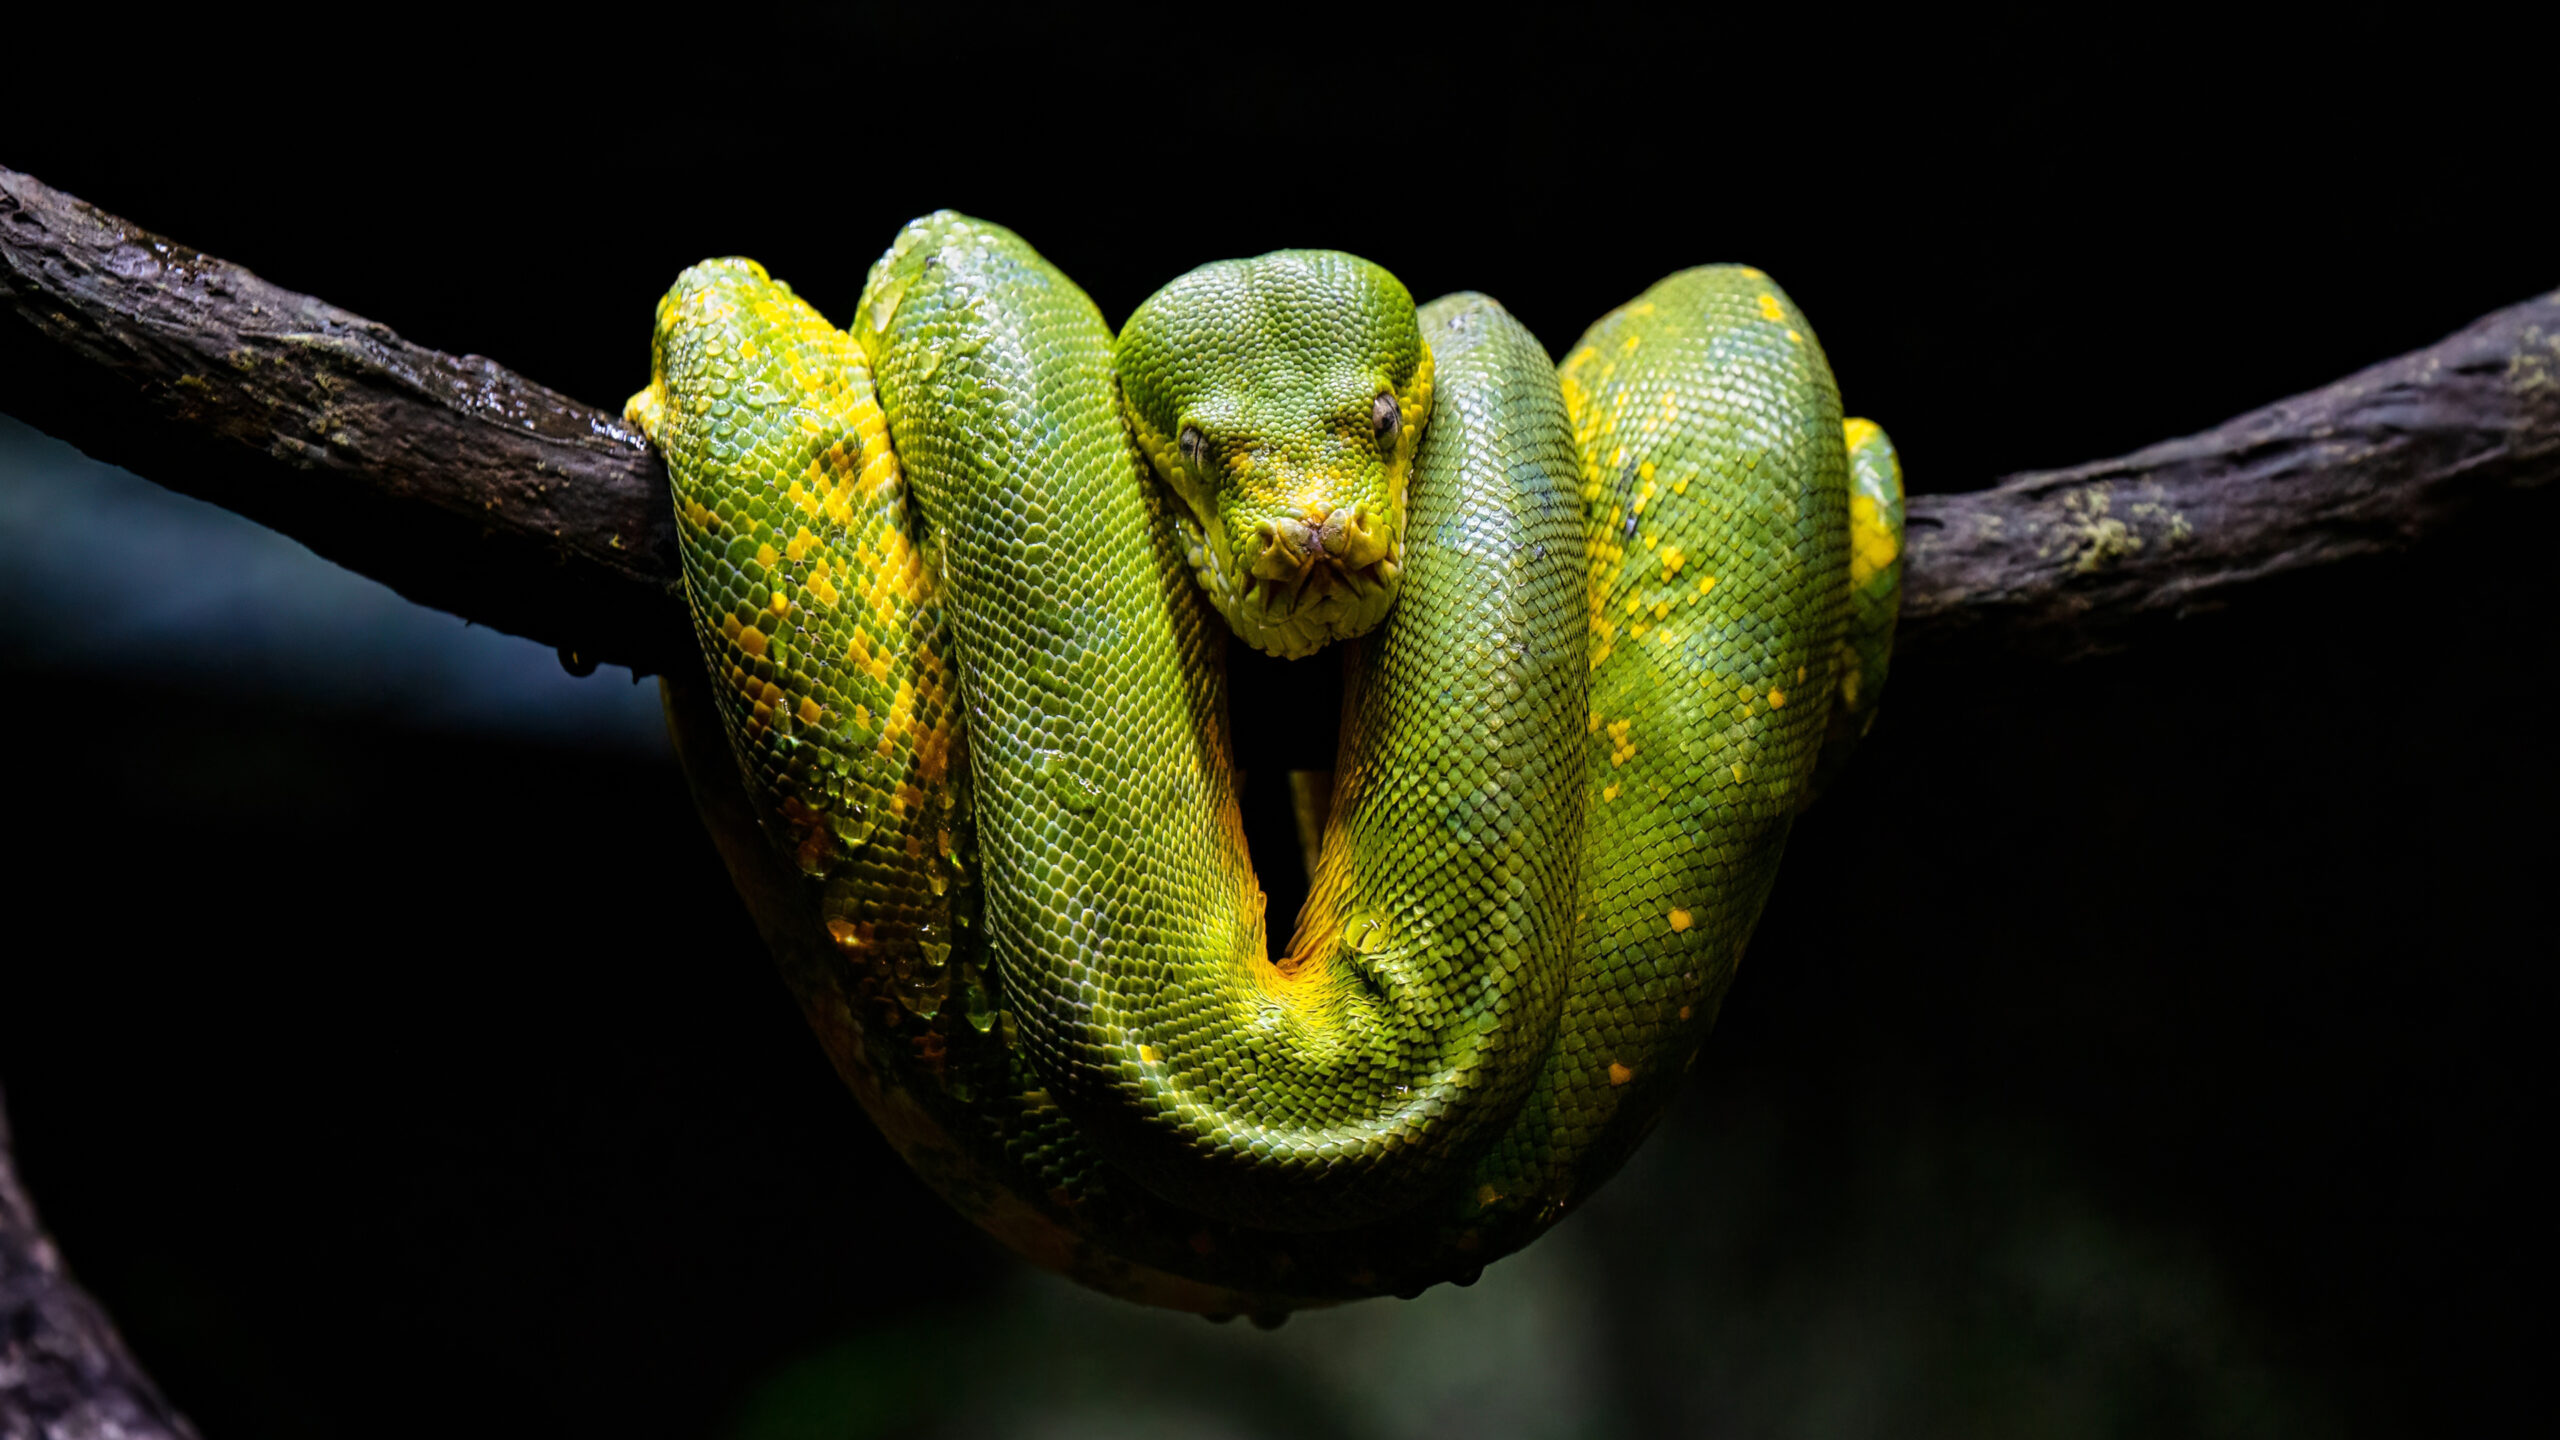 Green Yellow Python Snake On Tree Branch In Black Wallpaper K 2K Snake